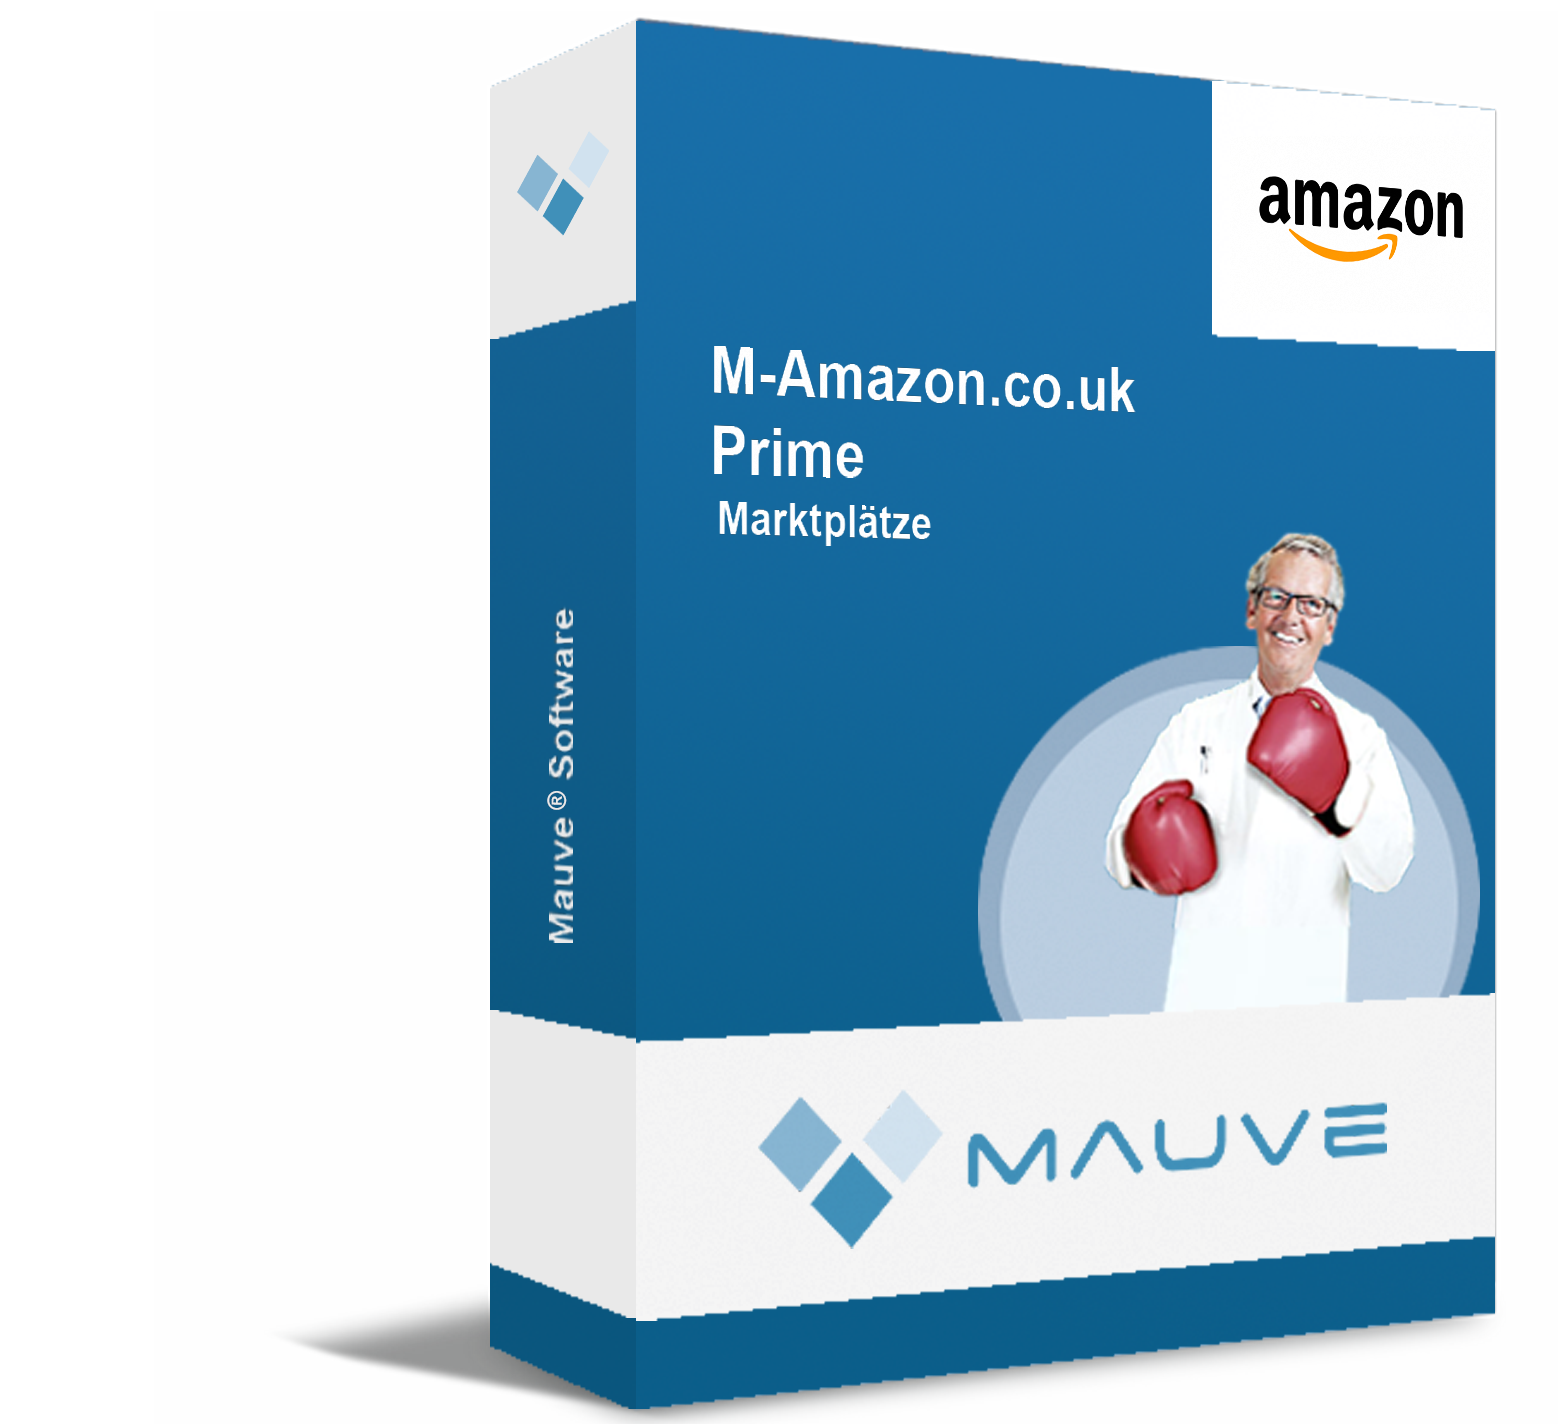 M-Amazon.co.uk Prime